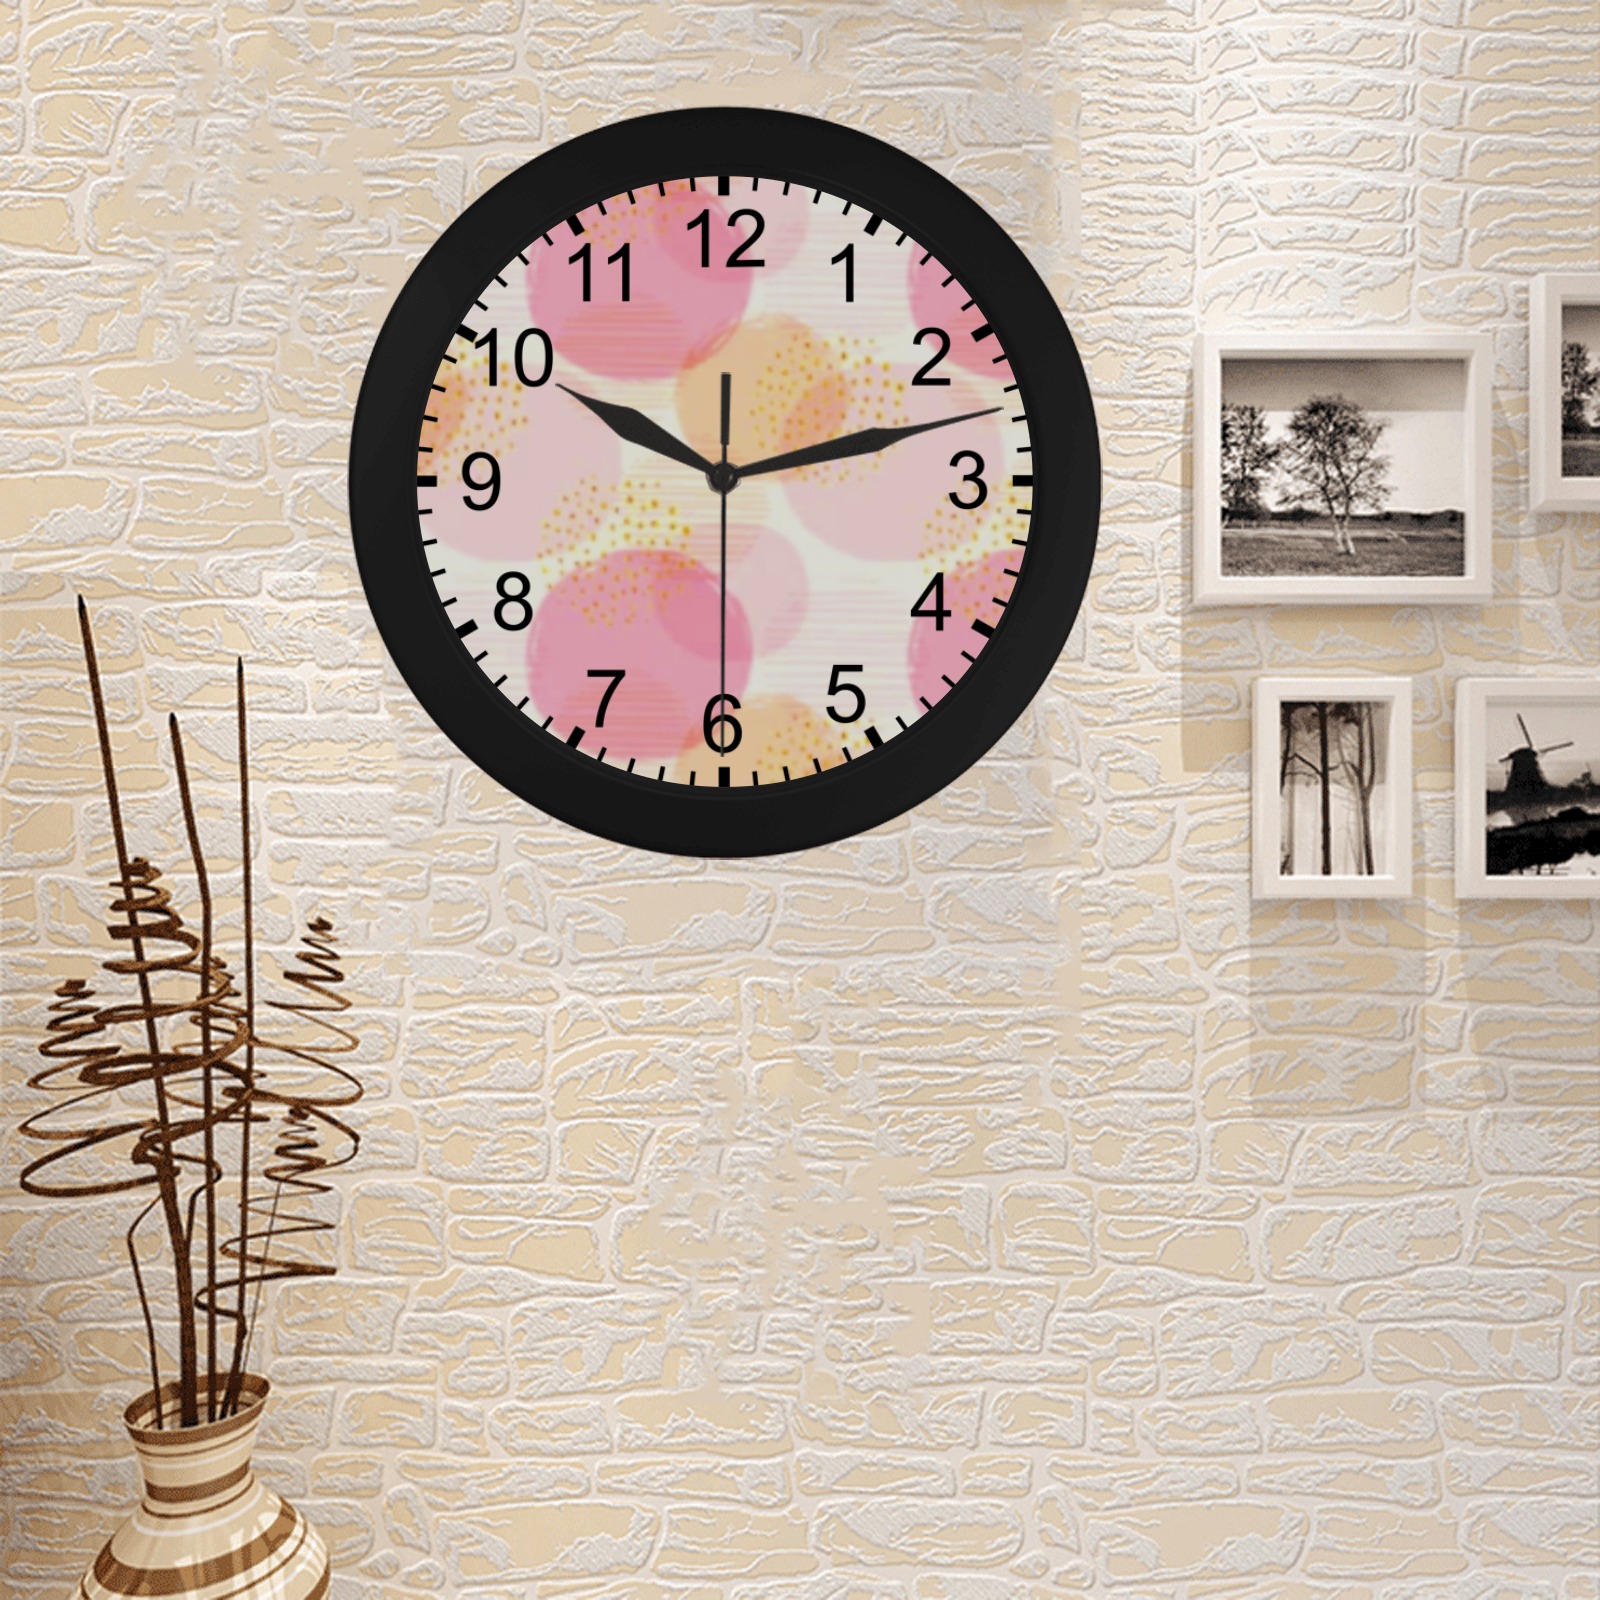 bb eafb Circular Plastic Wall clock